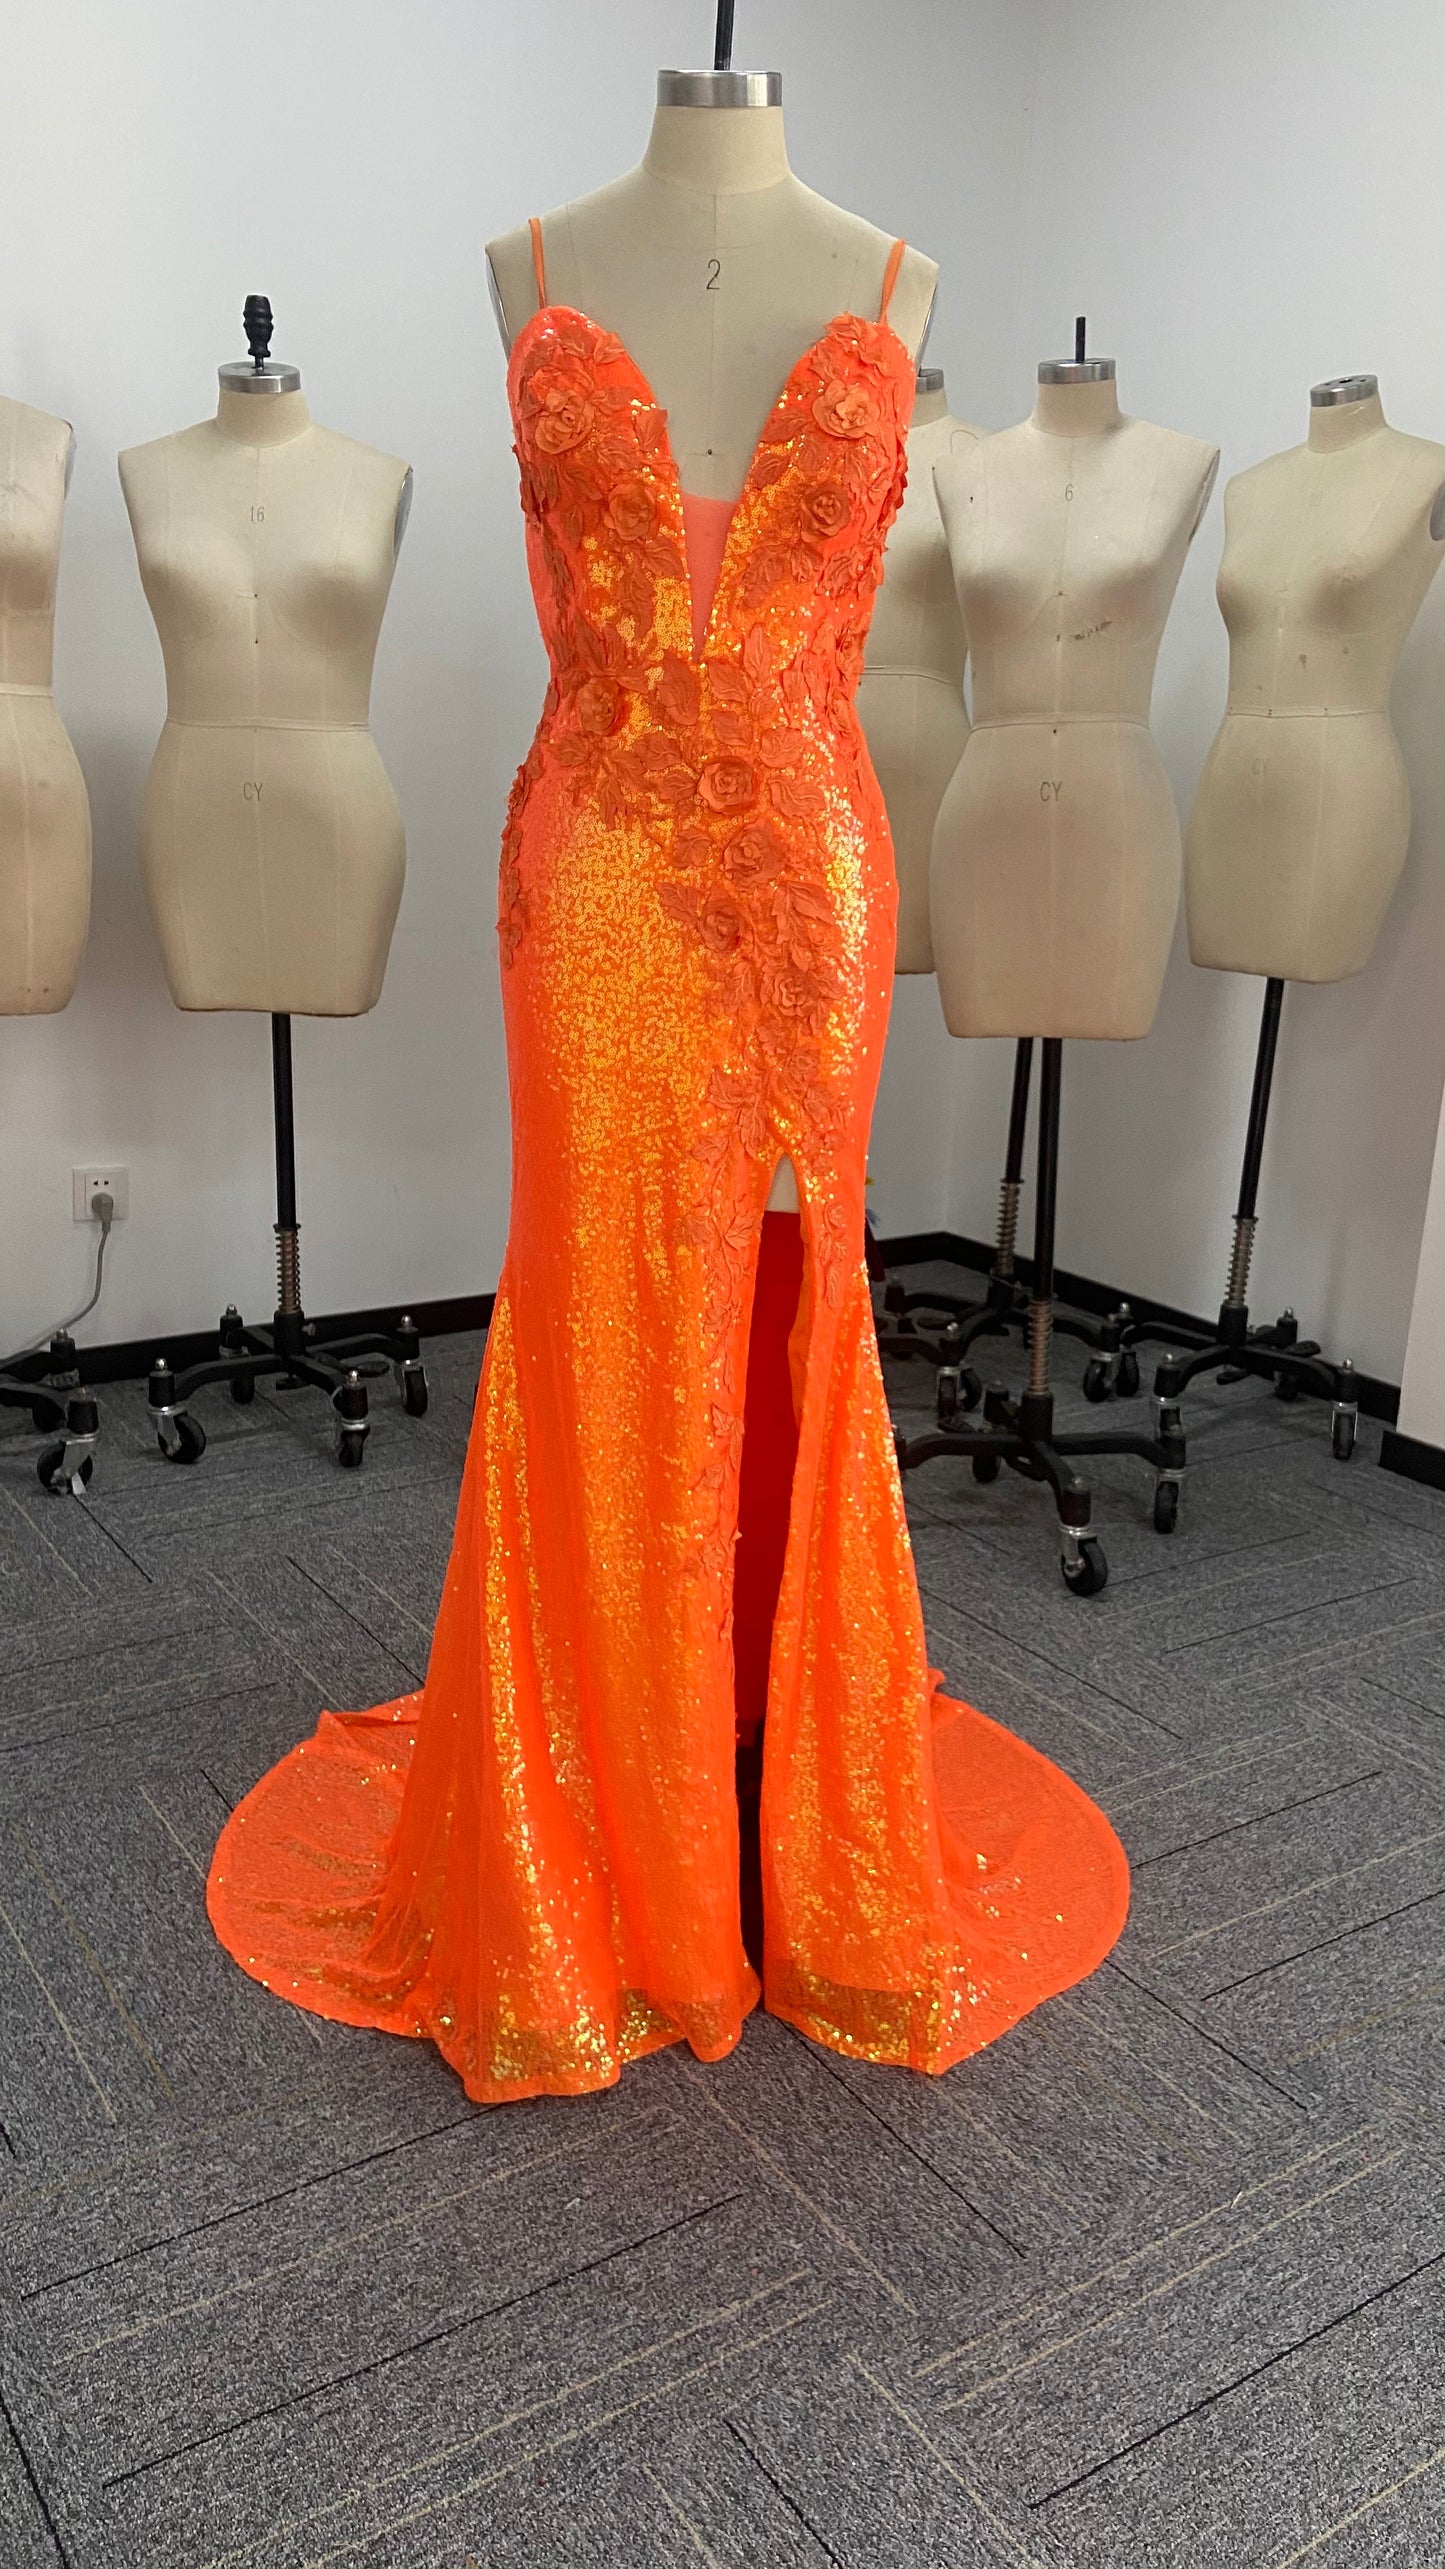 Spaghetti Straps Orange Sequins Appliques Long Prom Dress with Slit QP2551